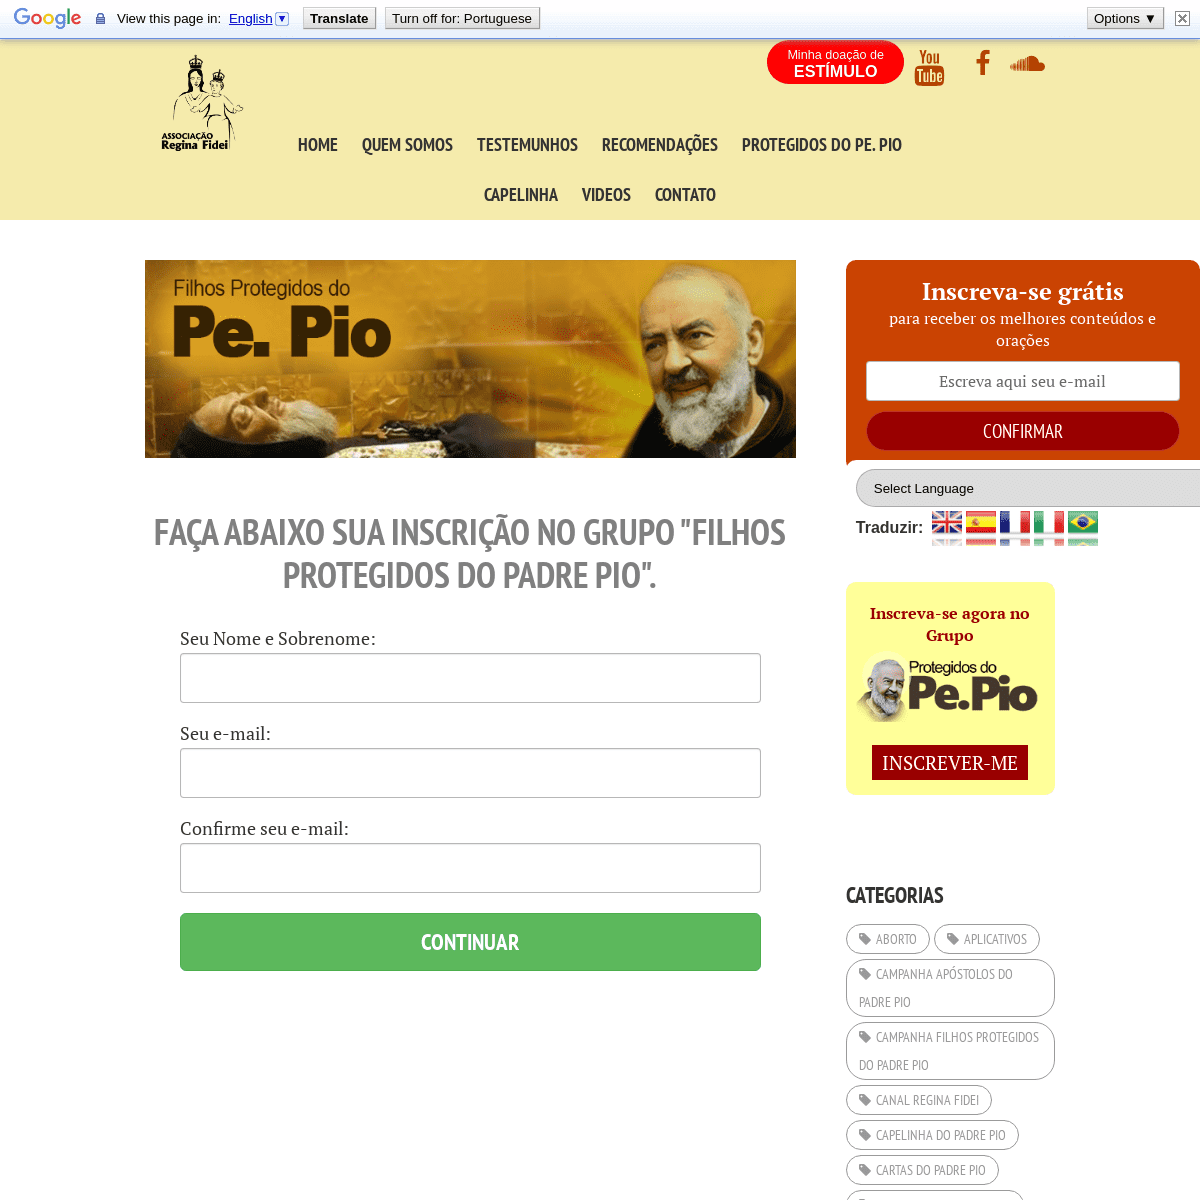 A complete backup of protegidosdopadrepio.com.br